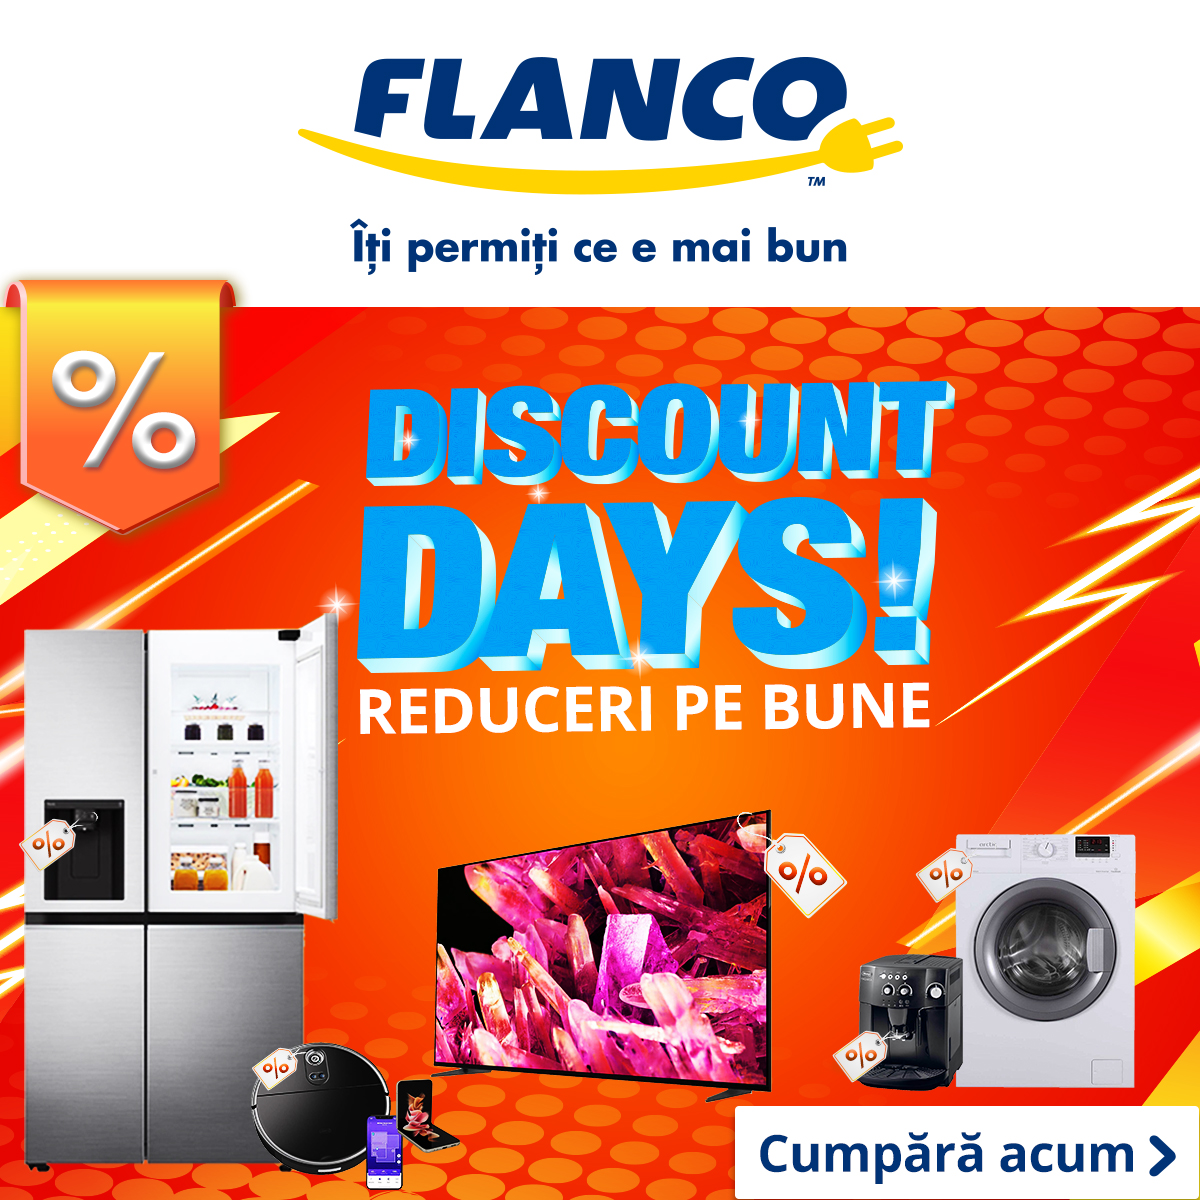 Flanco - Discount Days